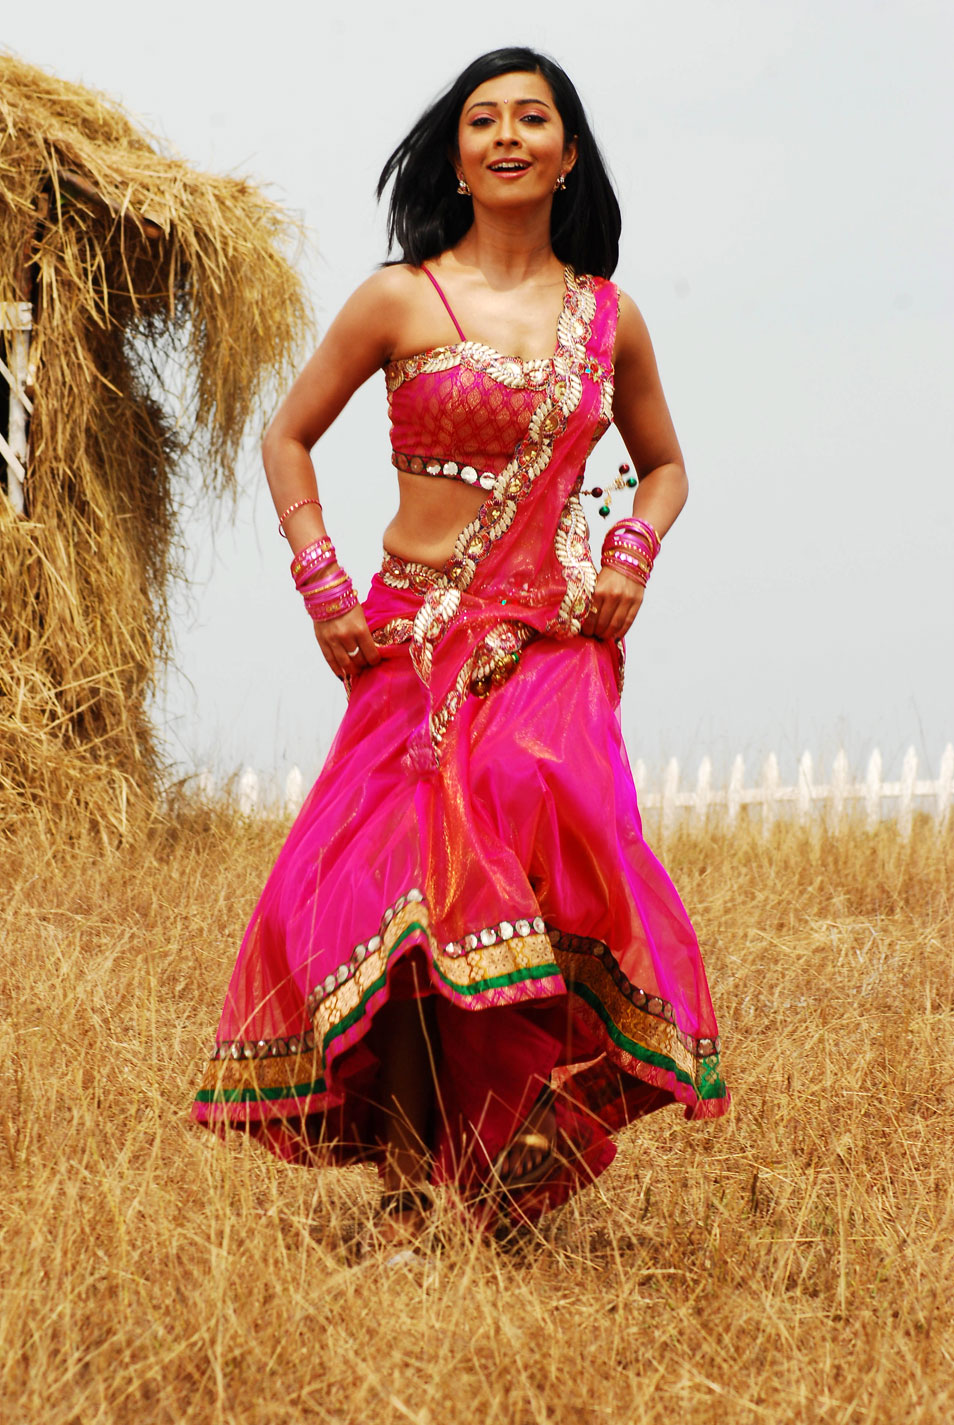 Radhika Pandit Bf Sex - Radhika Pandit s POSES Stunning and Beautiful, Have a Glance